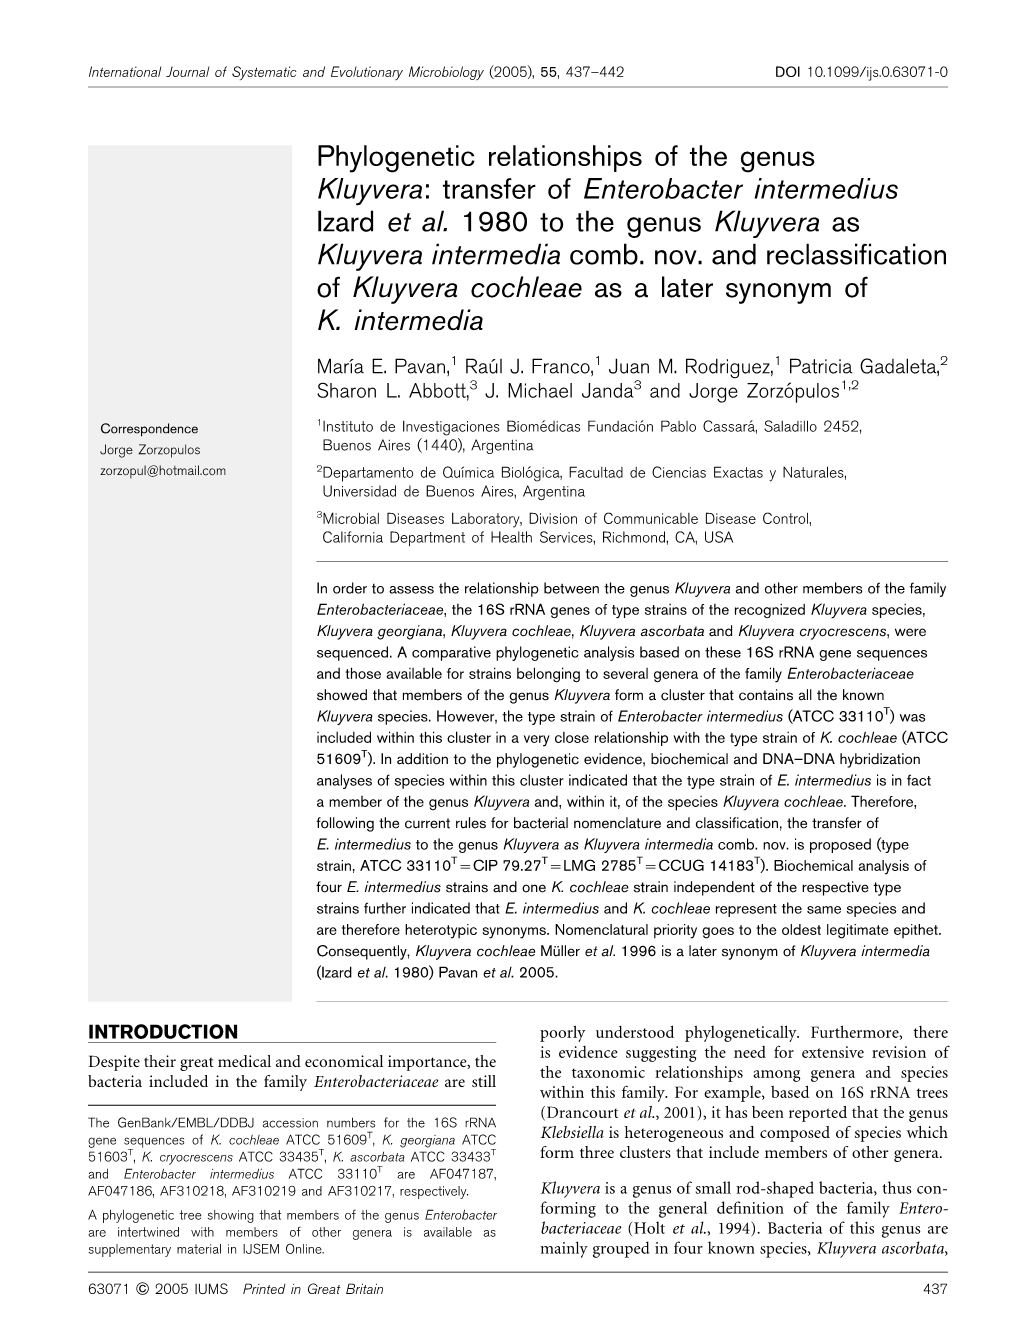 Transfer of Enterobacter Intermedius Izard Et Al. 1980 to the Genus Kluyvera As Kluyvera Intermedia Comb